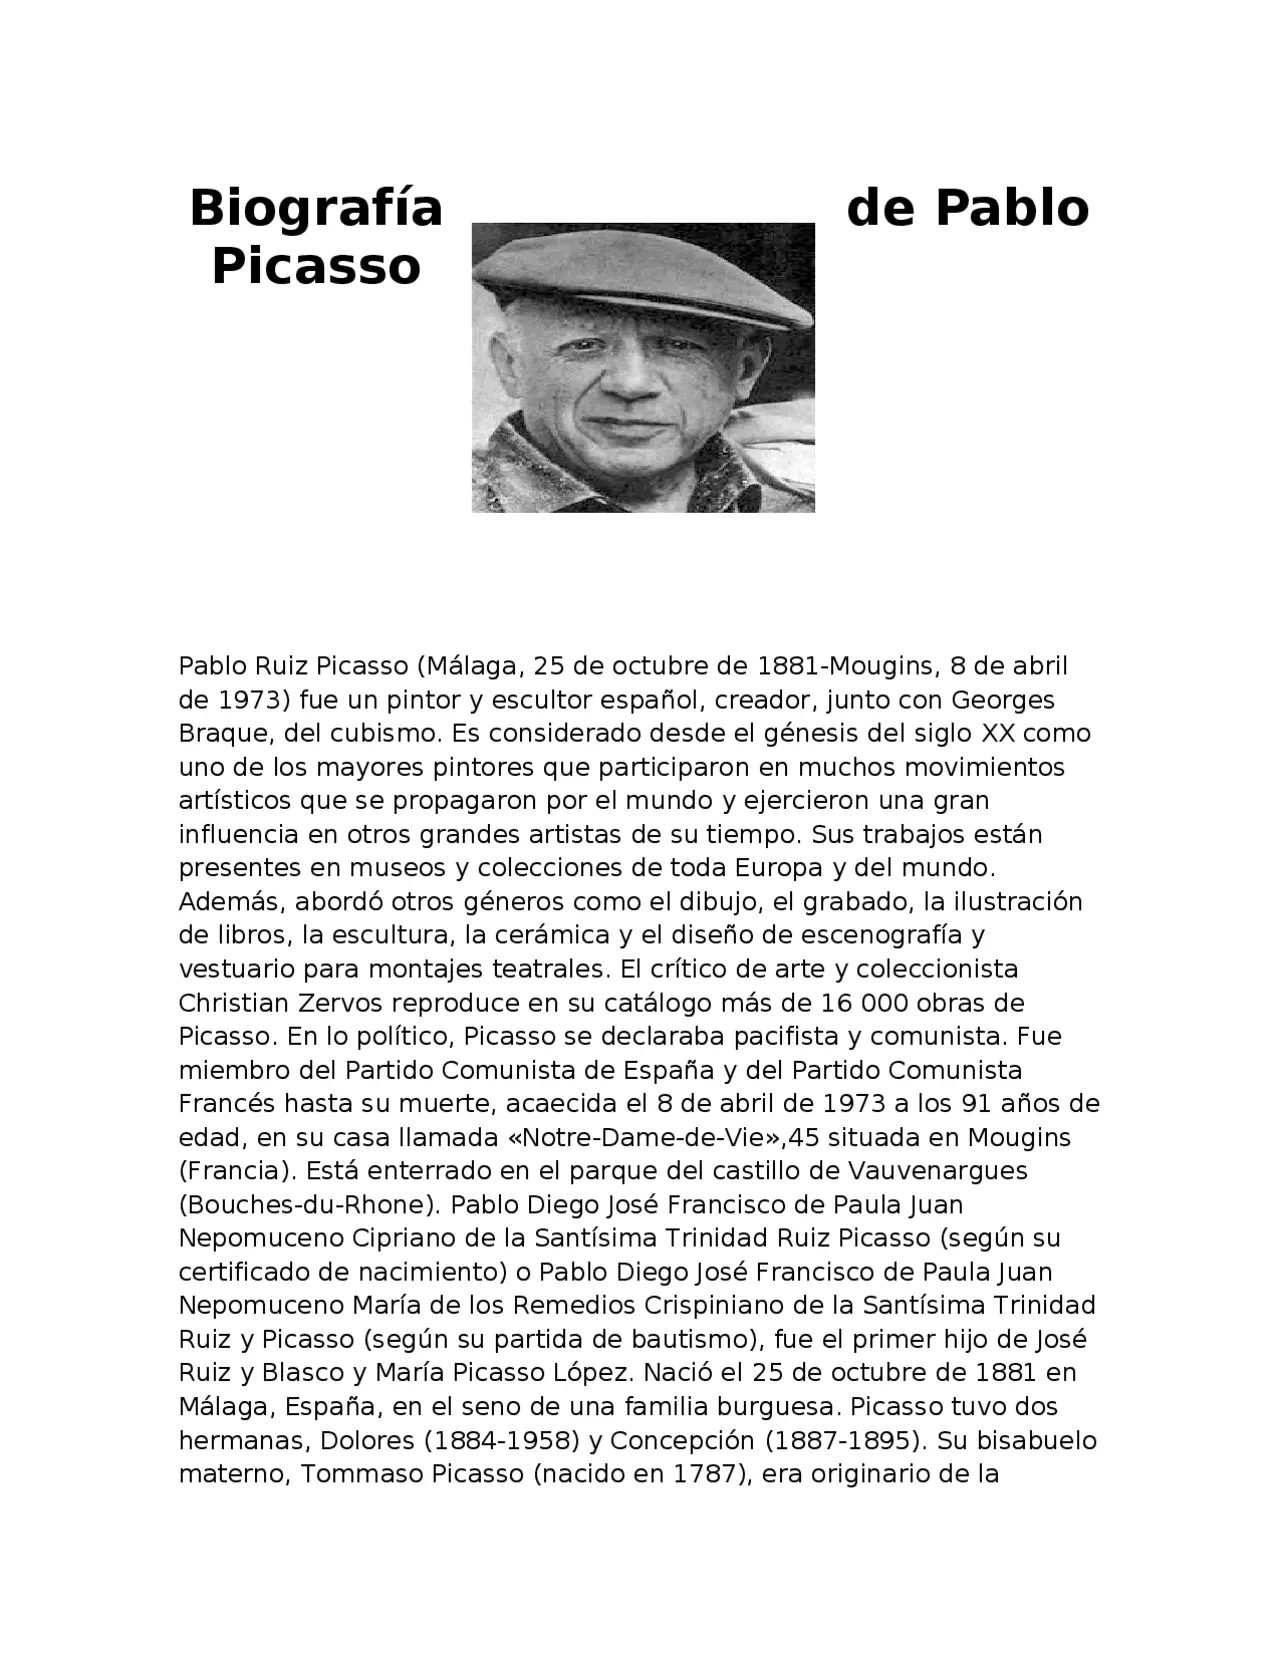 biografia de pablo picasso resumen lo mas importante - Qué es lo más importante de Pablo Picasso